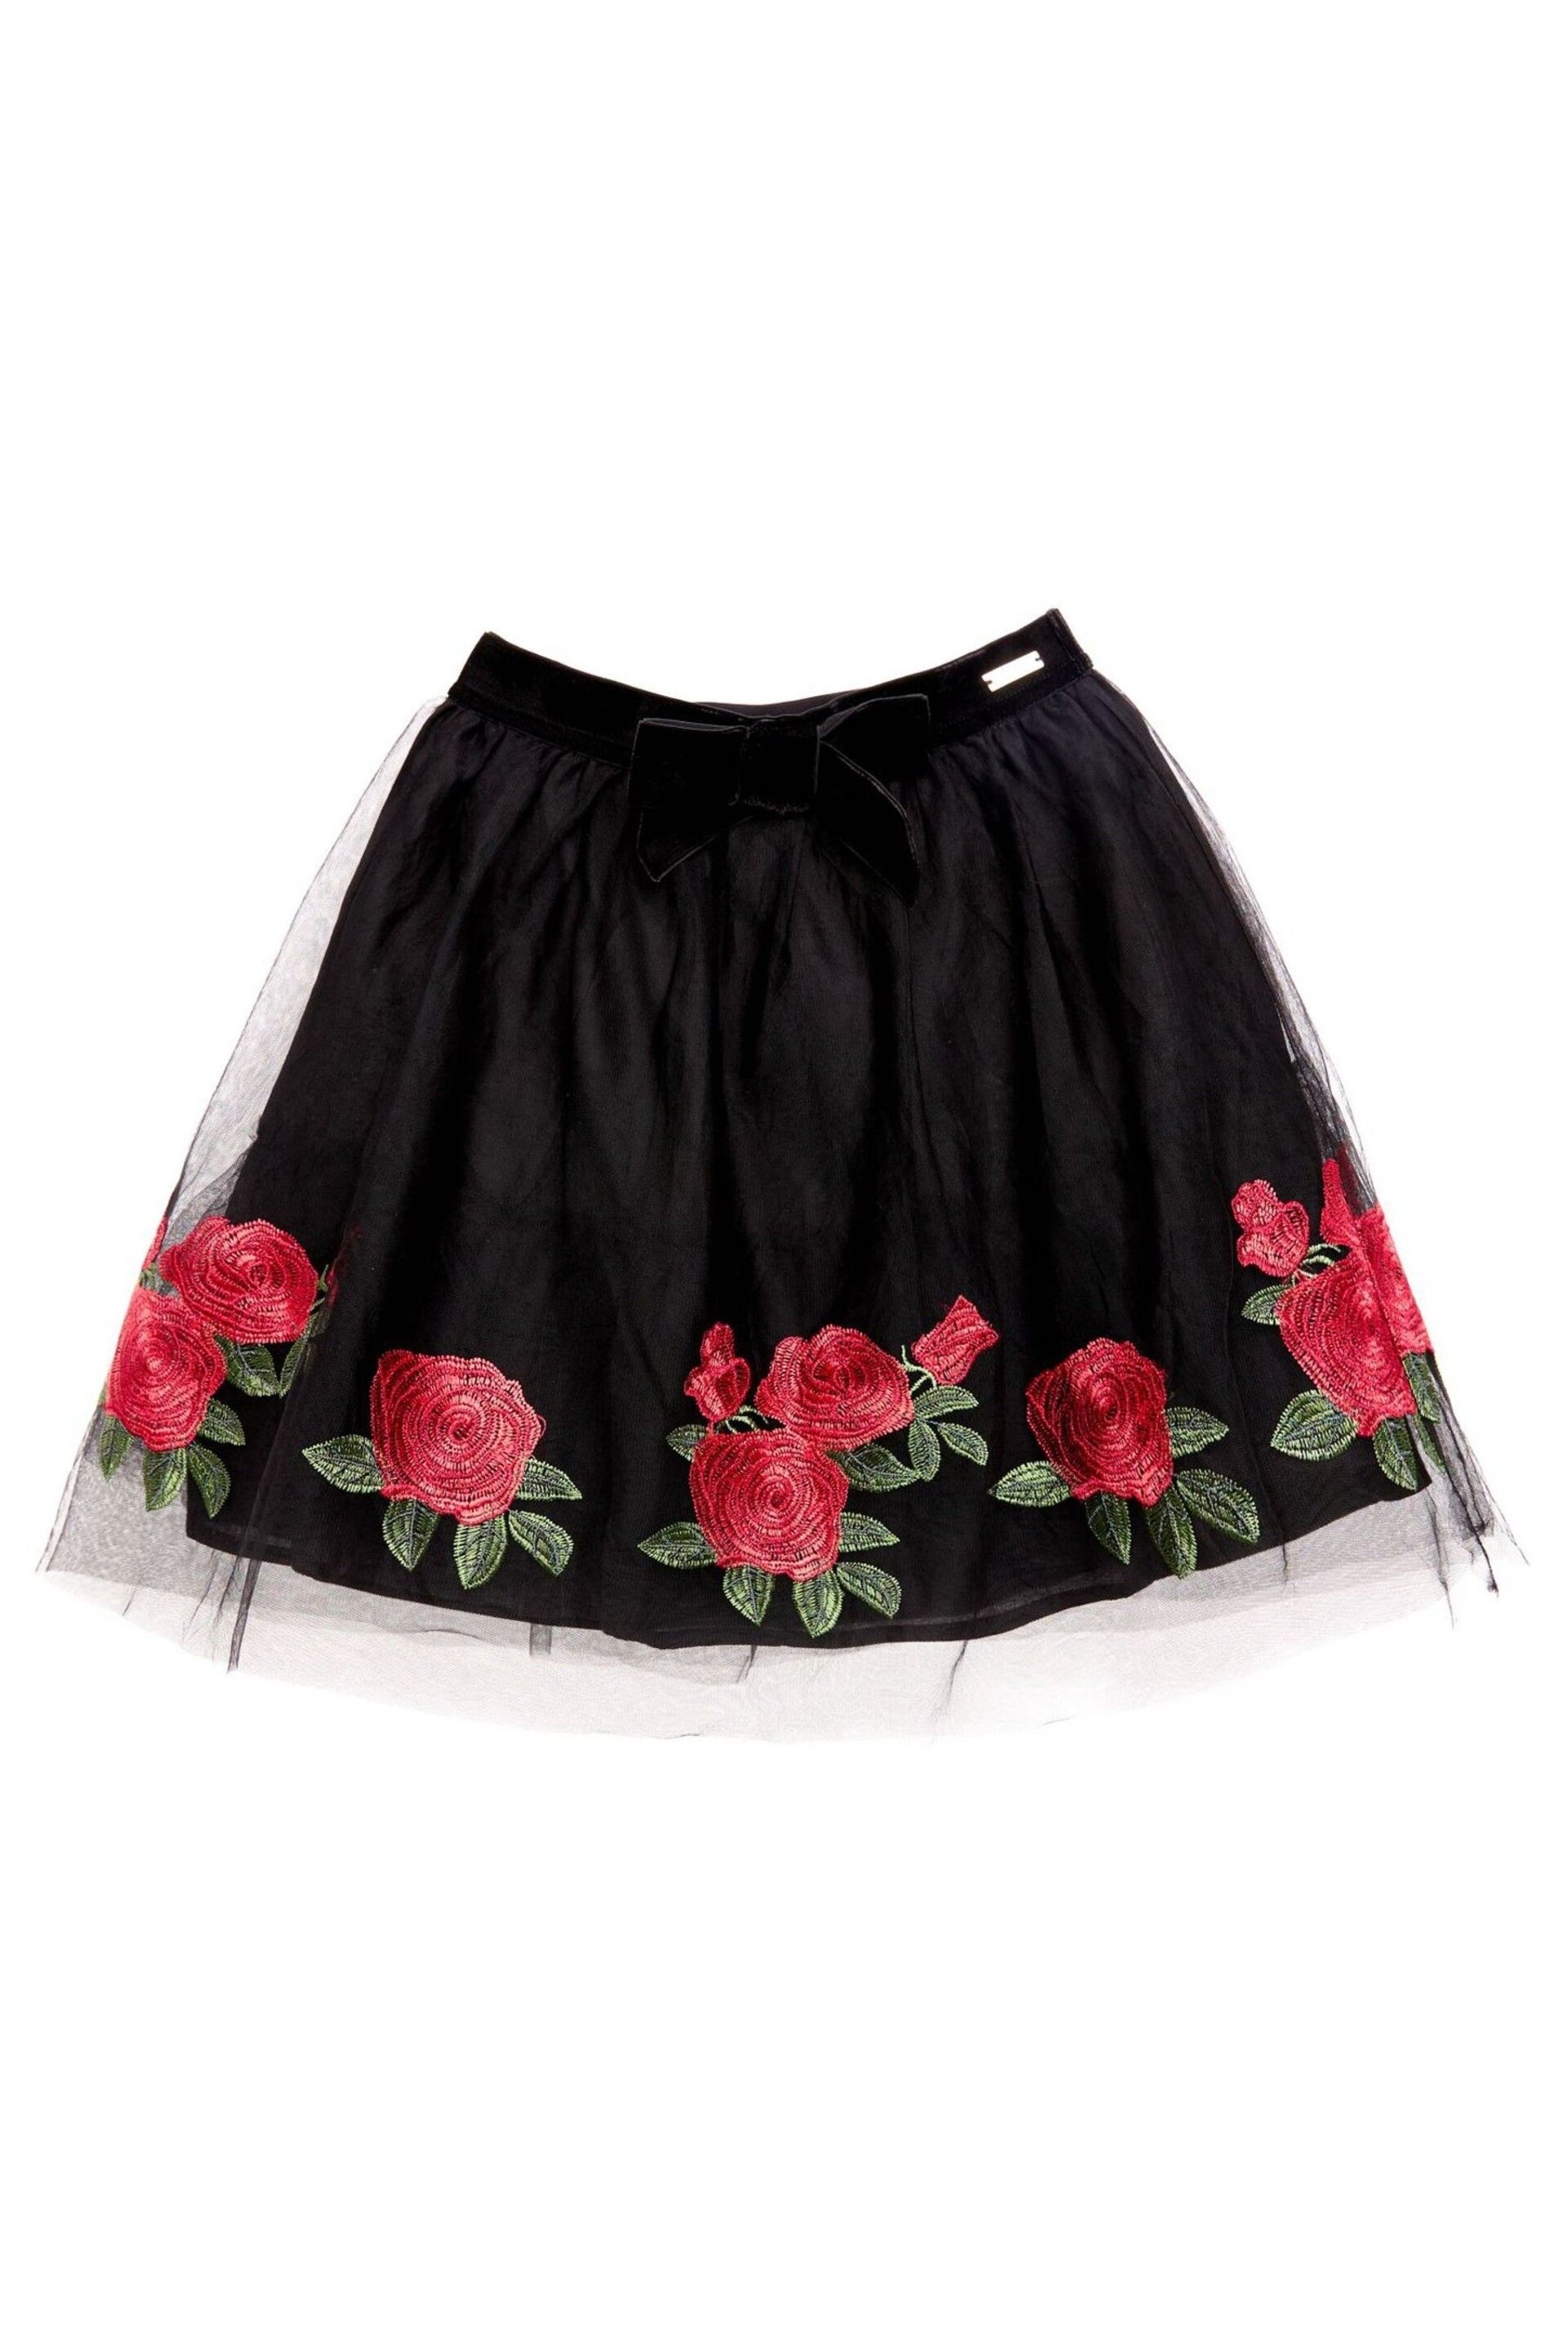 Nicole Miller Black Skirt - Image 1 of 2